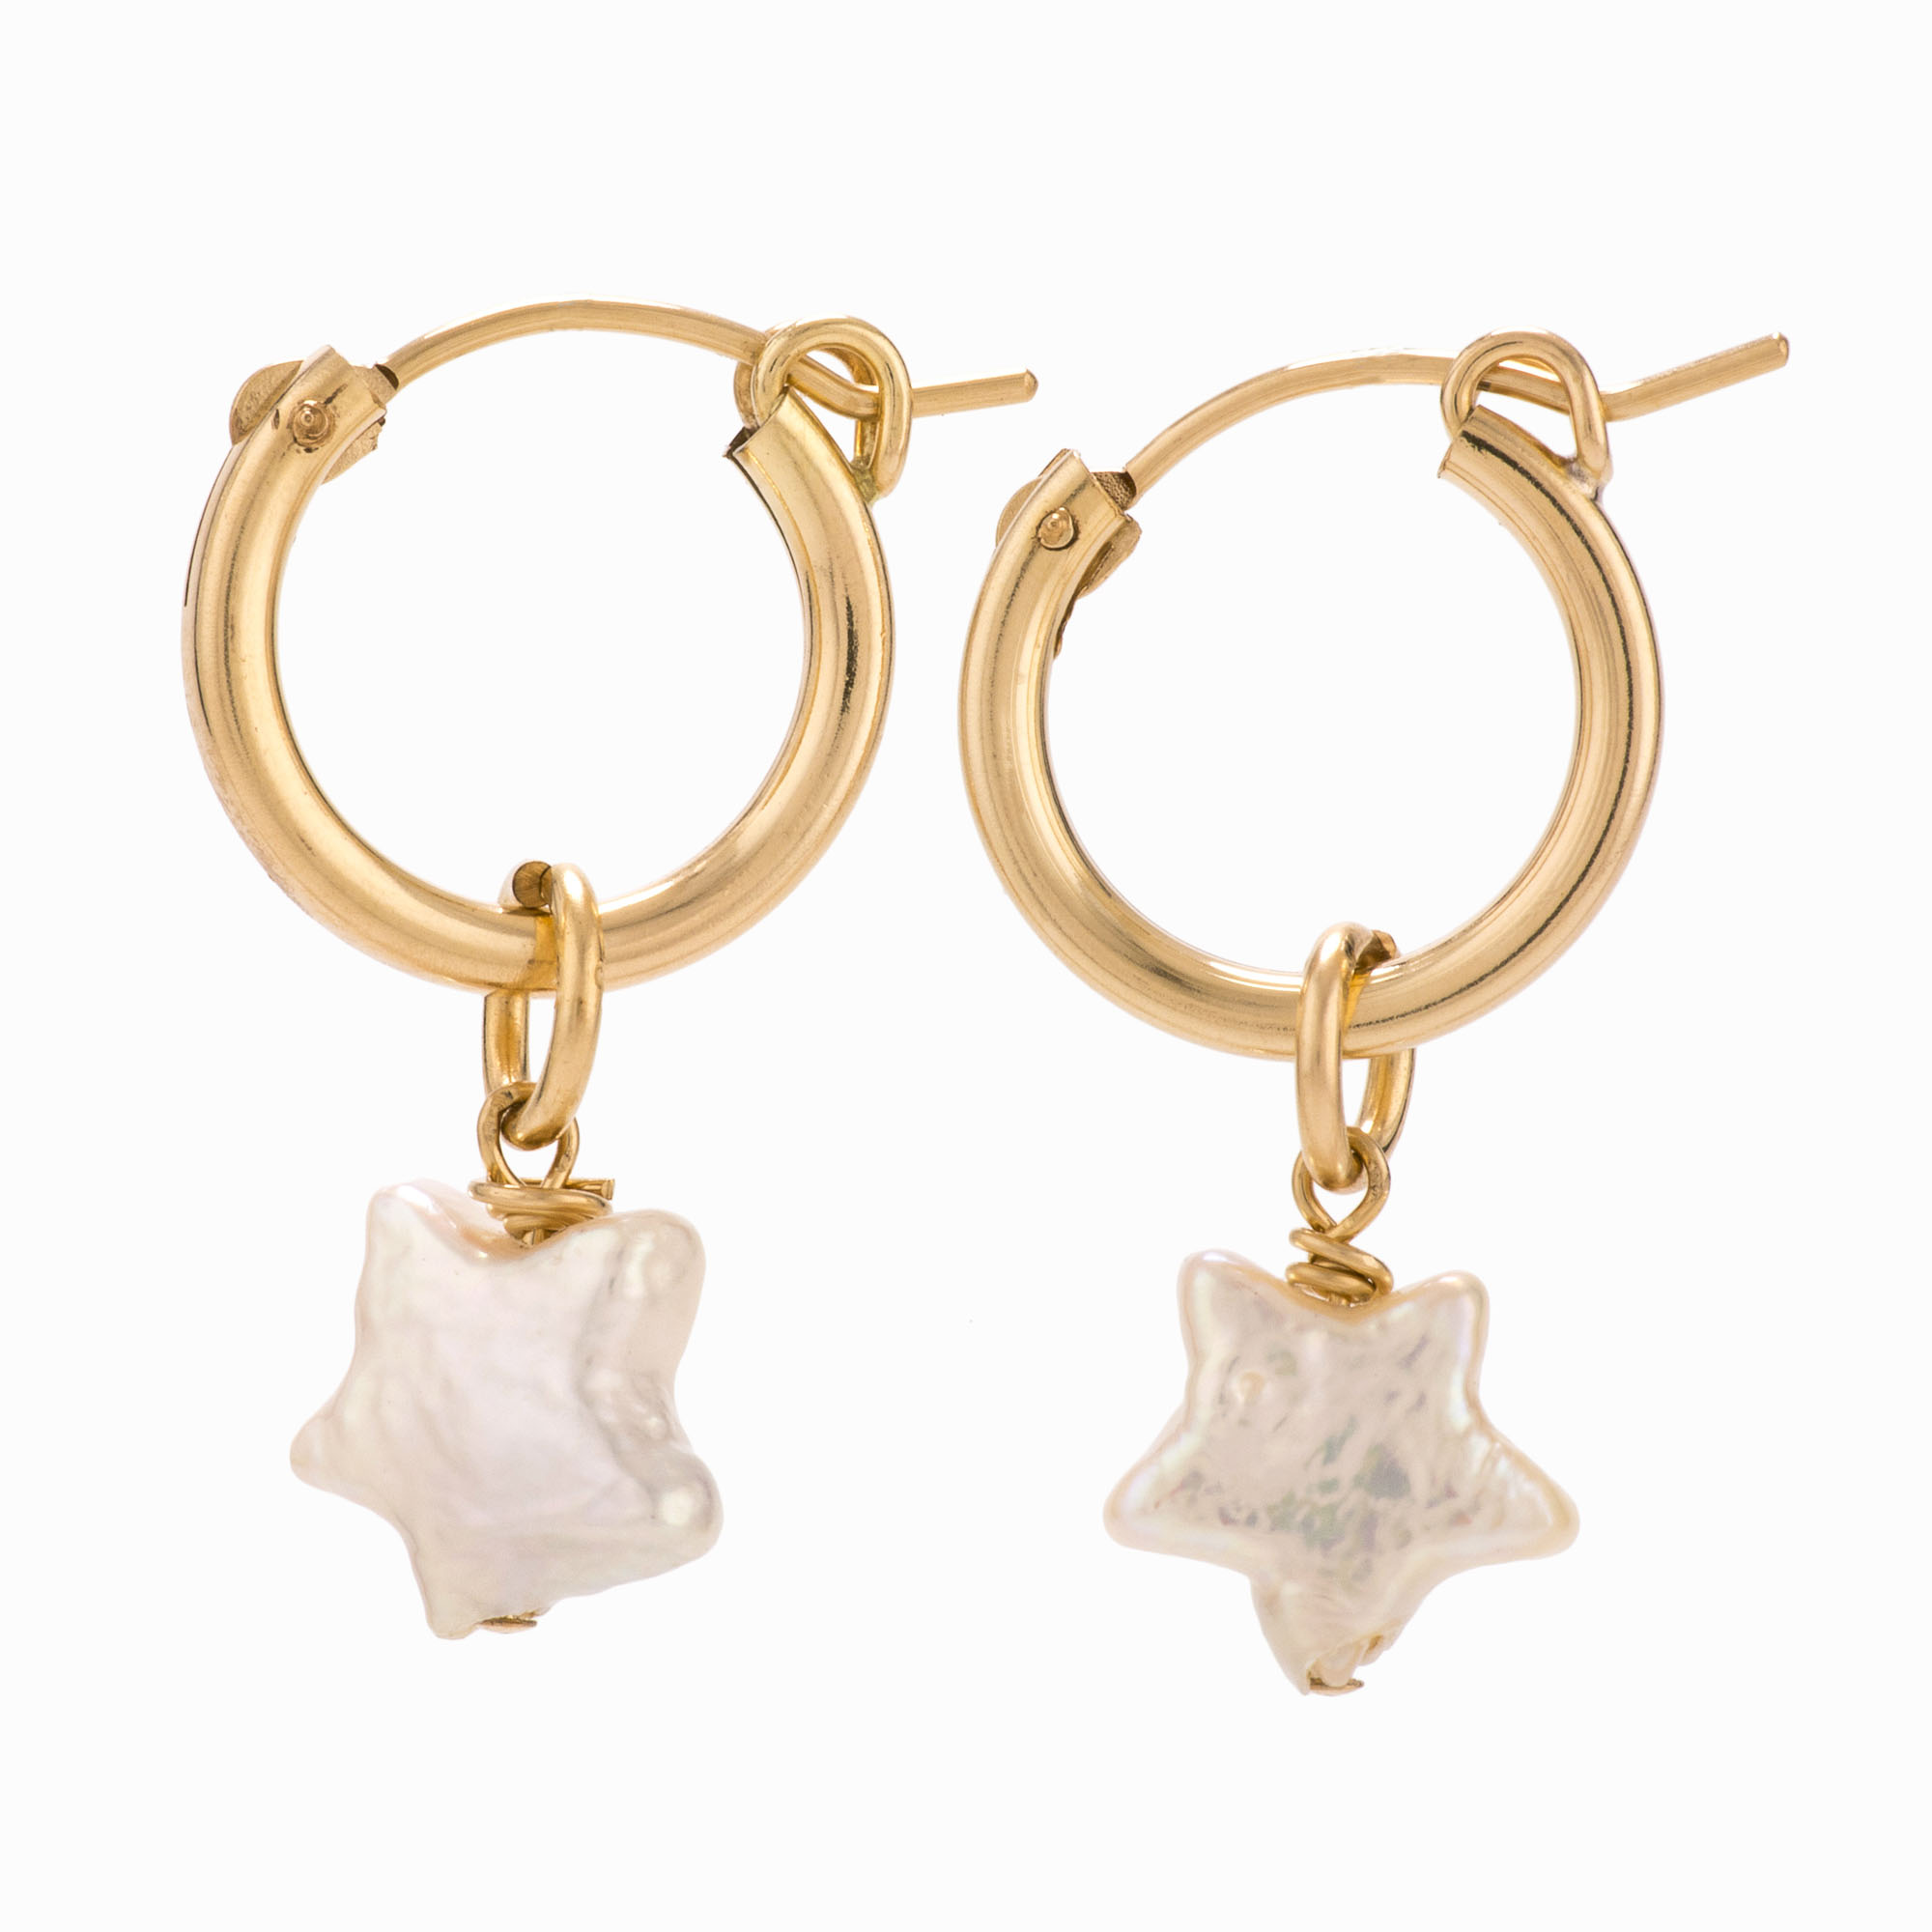 Featured image for “Neptune Hoop Earrings”